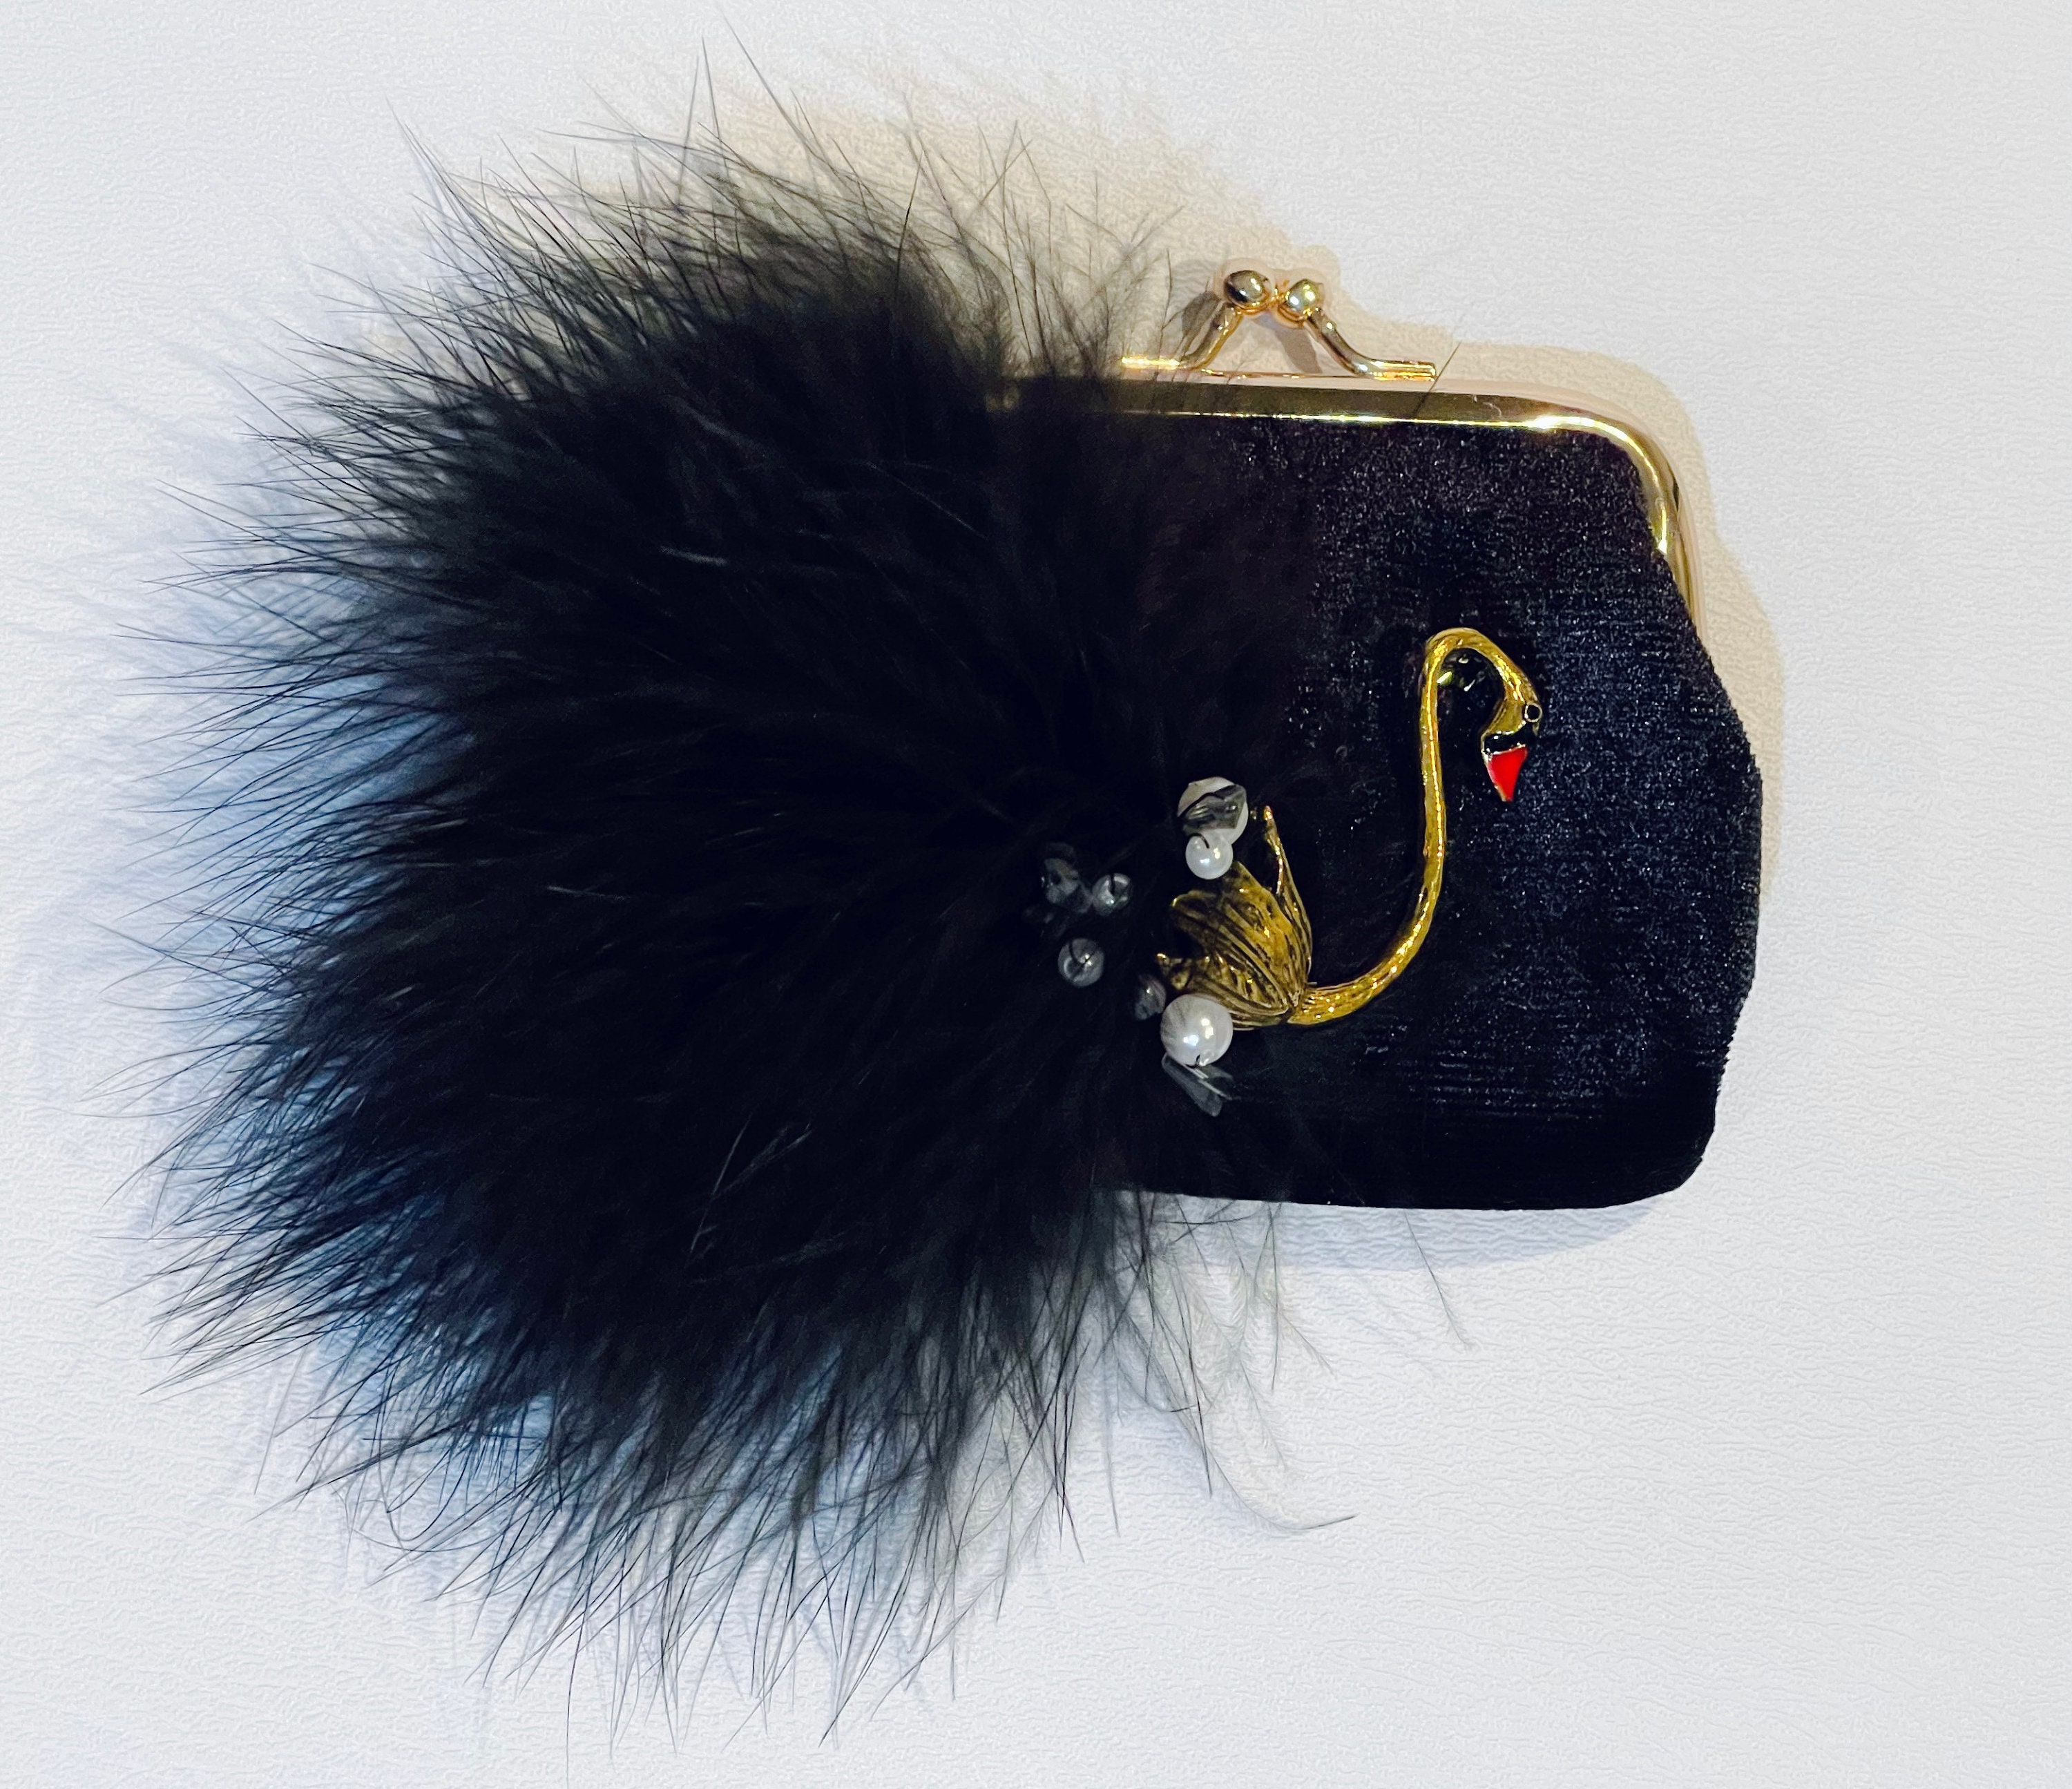 Elka black feather purse  Black feathers, Purses, Mini bag